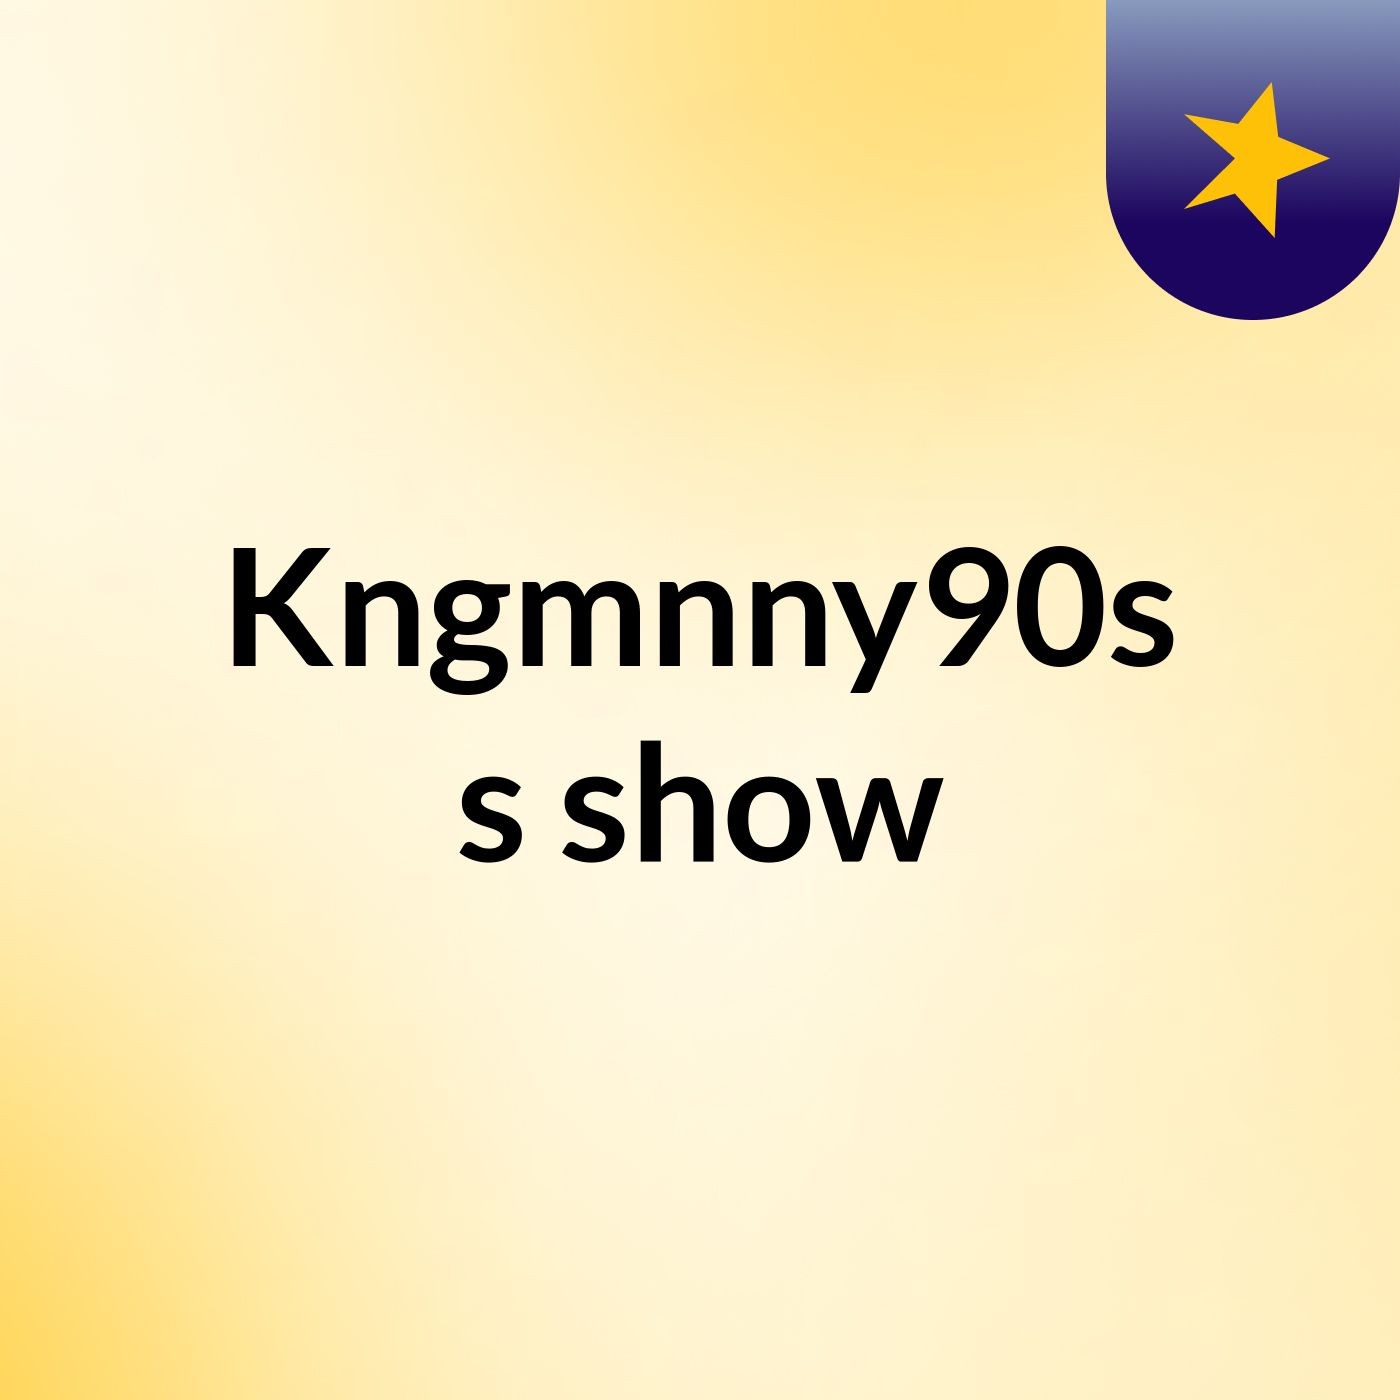 Kngmnny90s's show